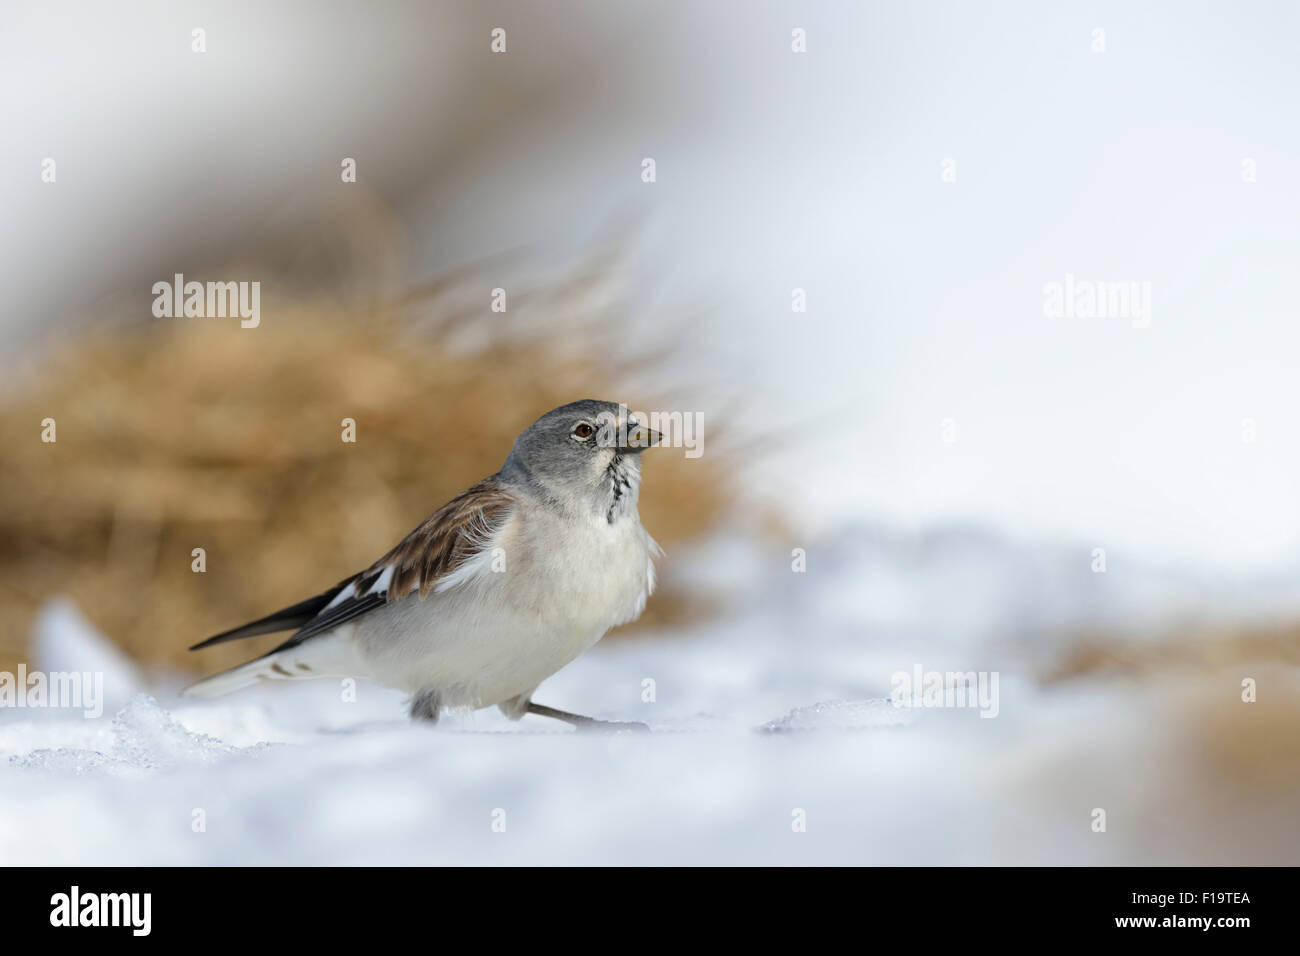 Montifringilla nivalis / White-winged Snowfinch / Snowfinch / Schneefink / Schneesperling sitting in snow beautiful surrounding. Stock Photo